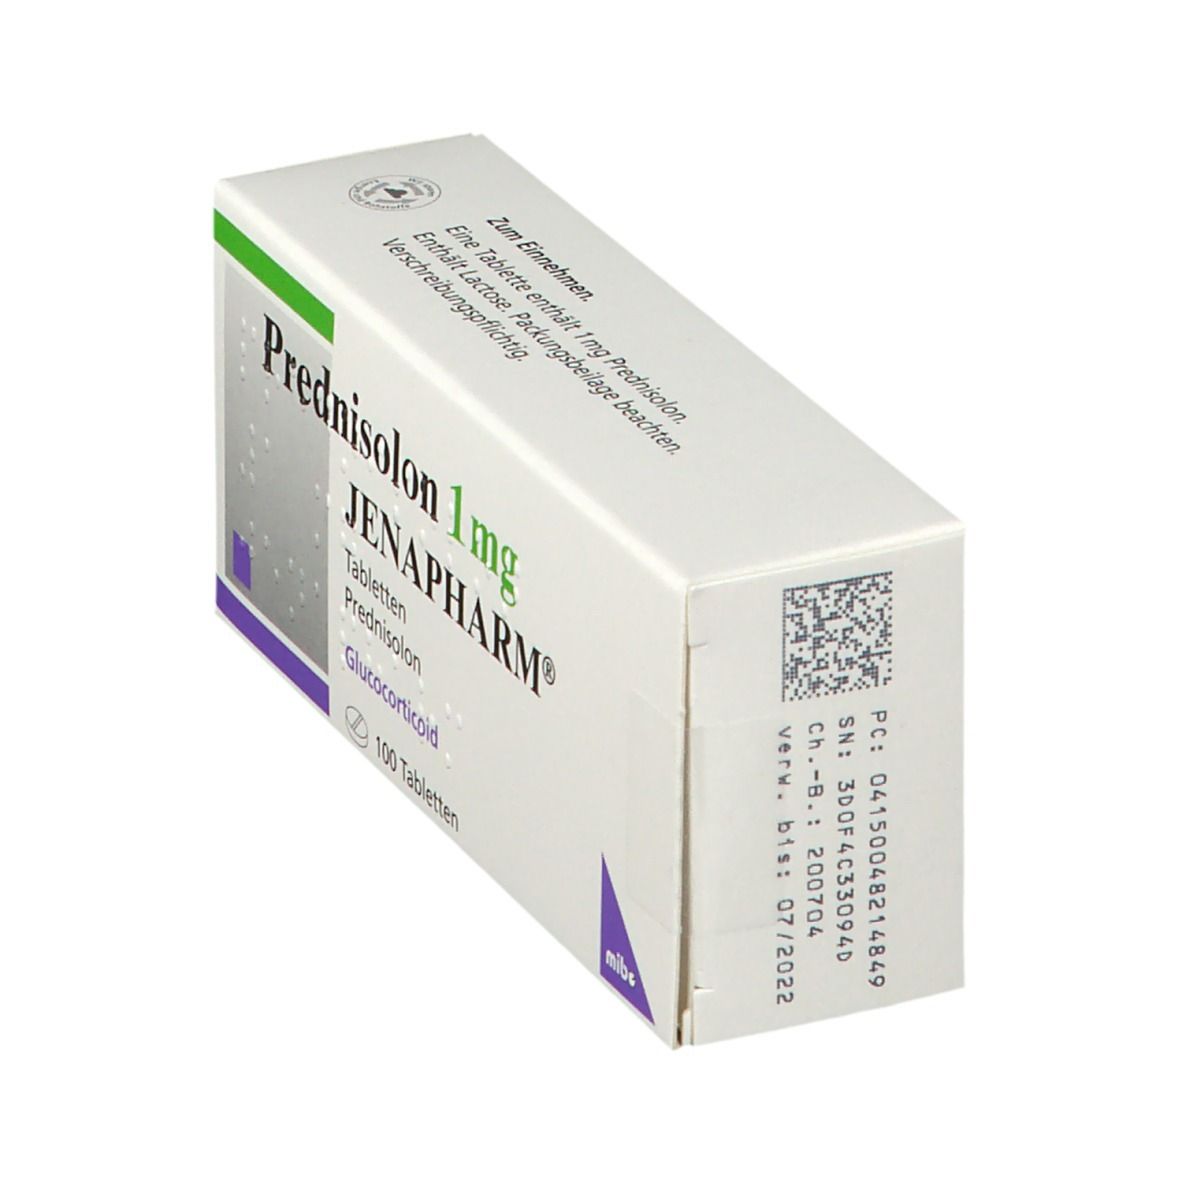 Prednisolon 1 mg JENAPHARM®